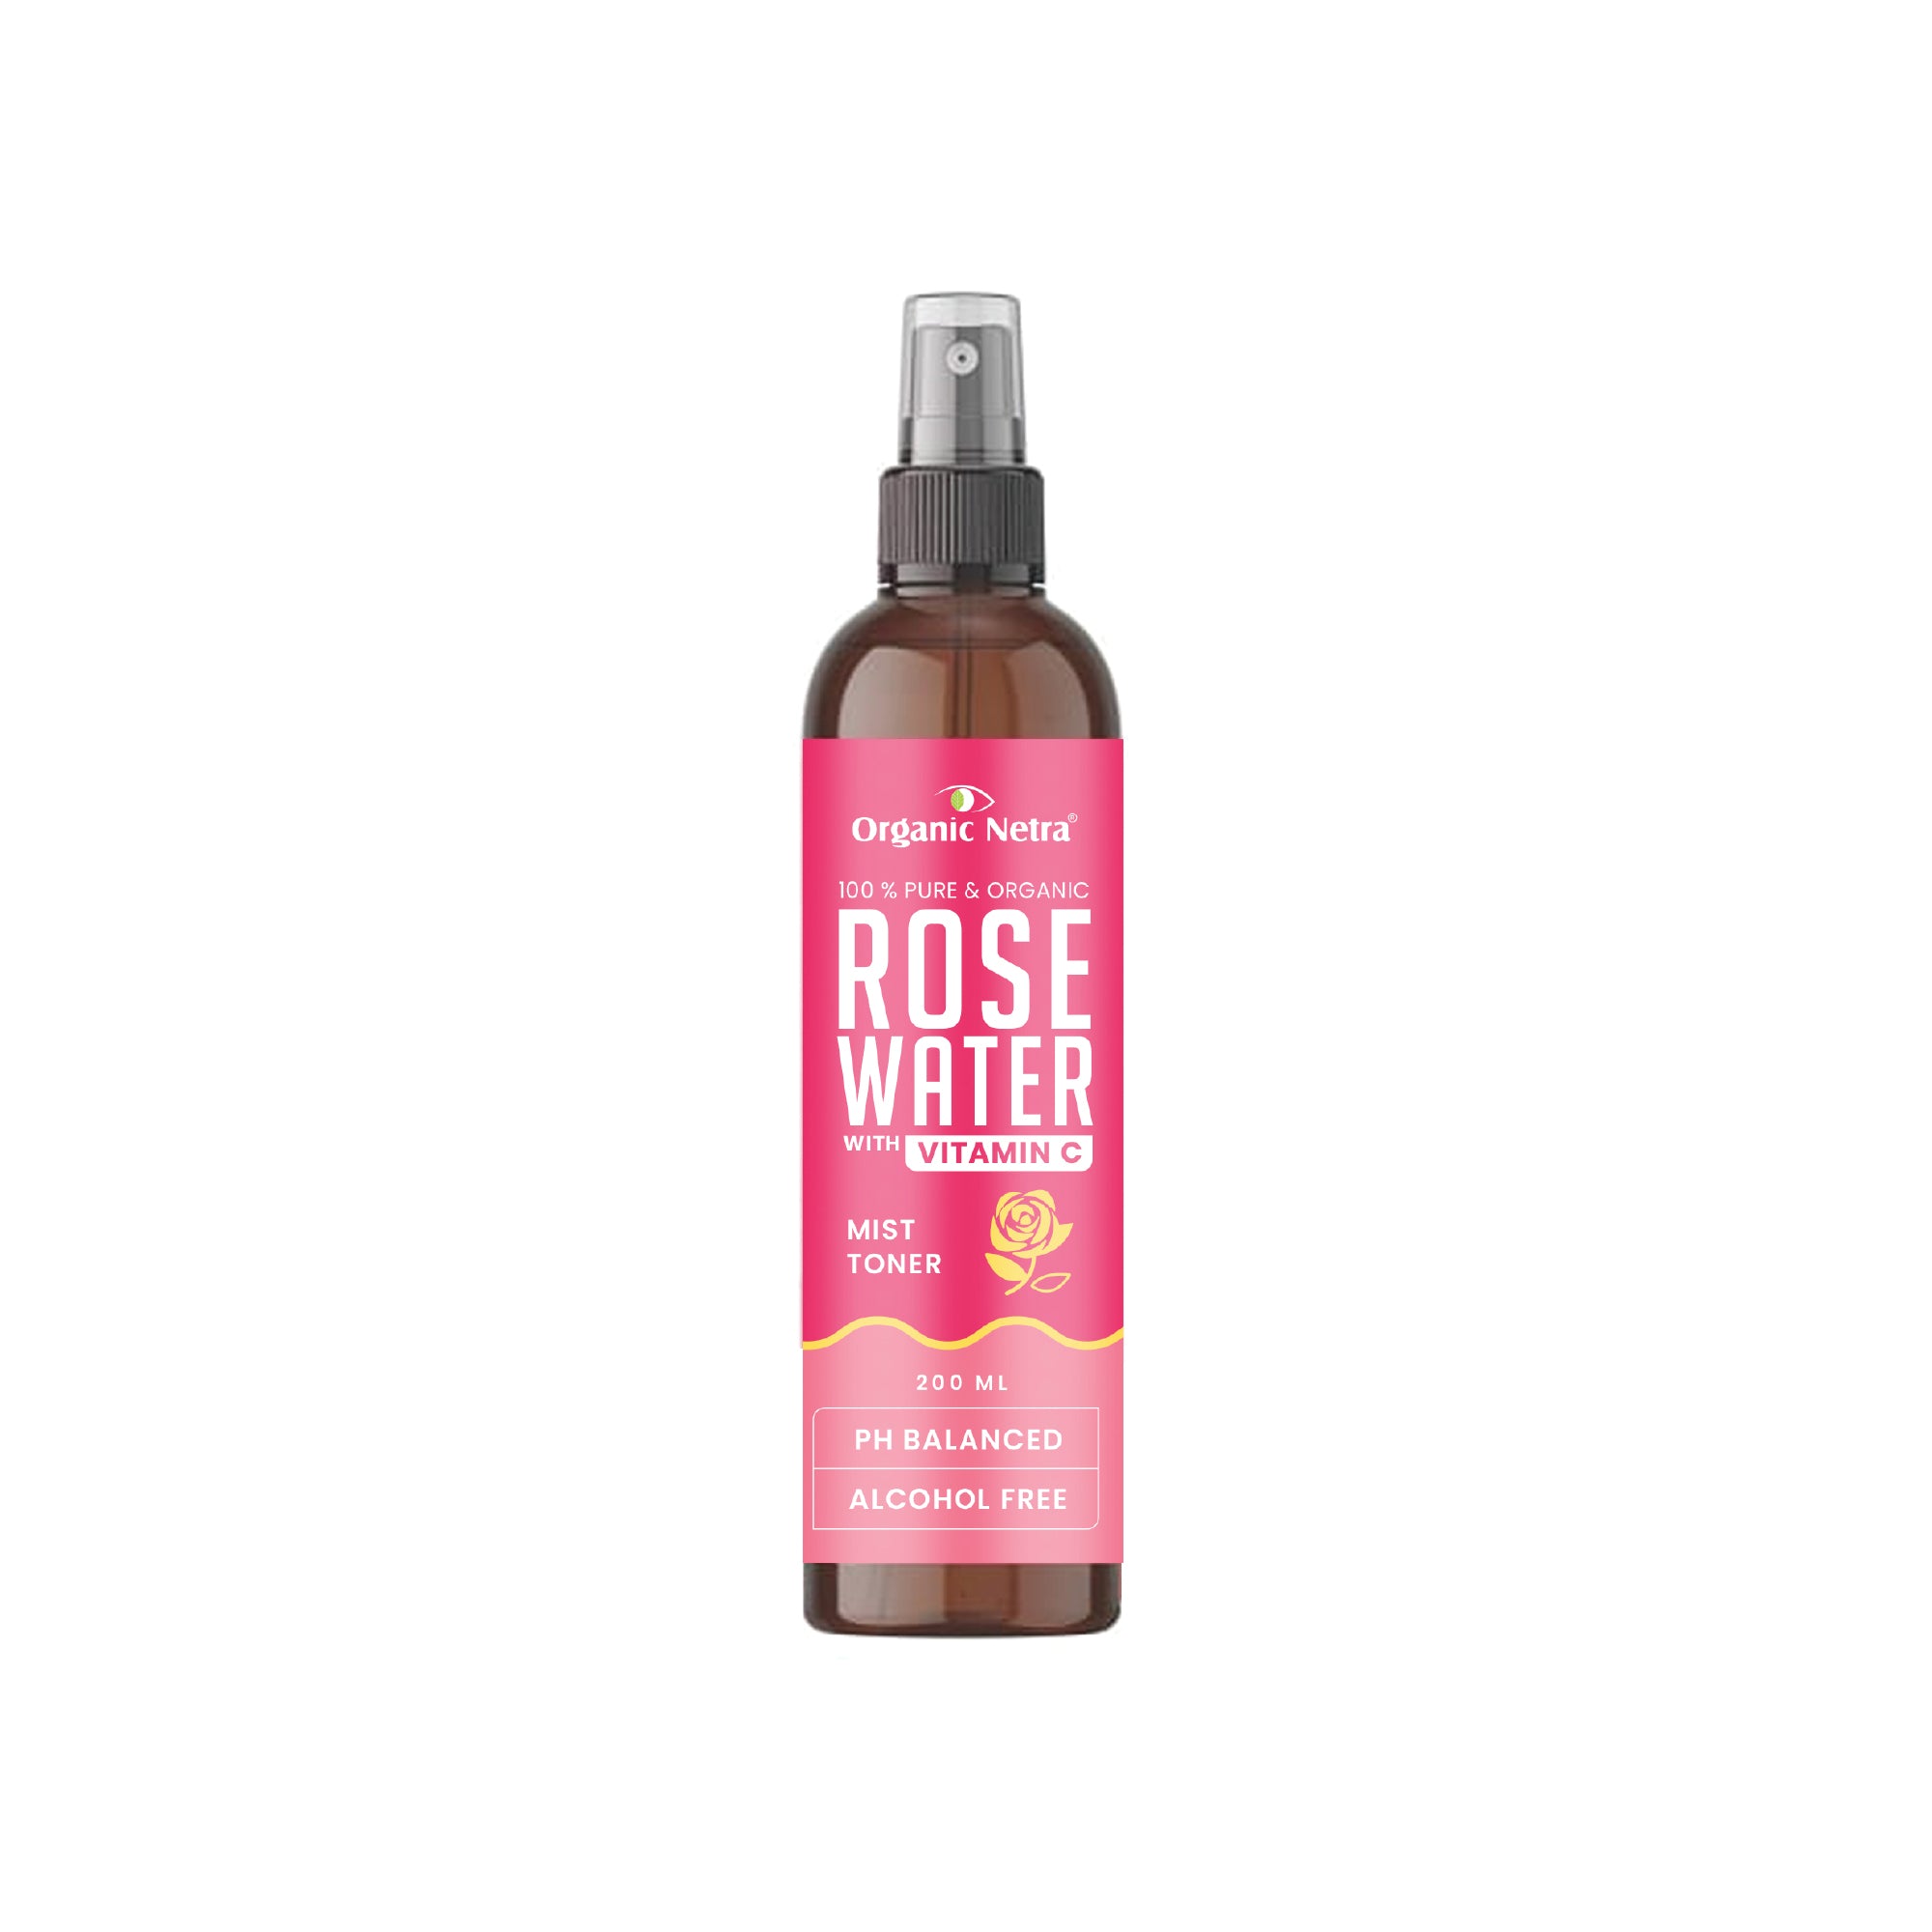 Rose Water + Aloe Vera Gel Combo